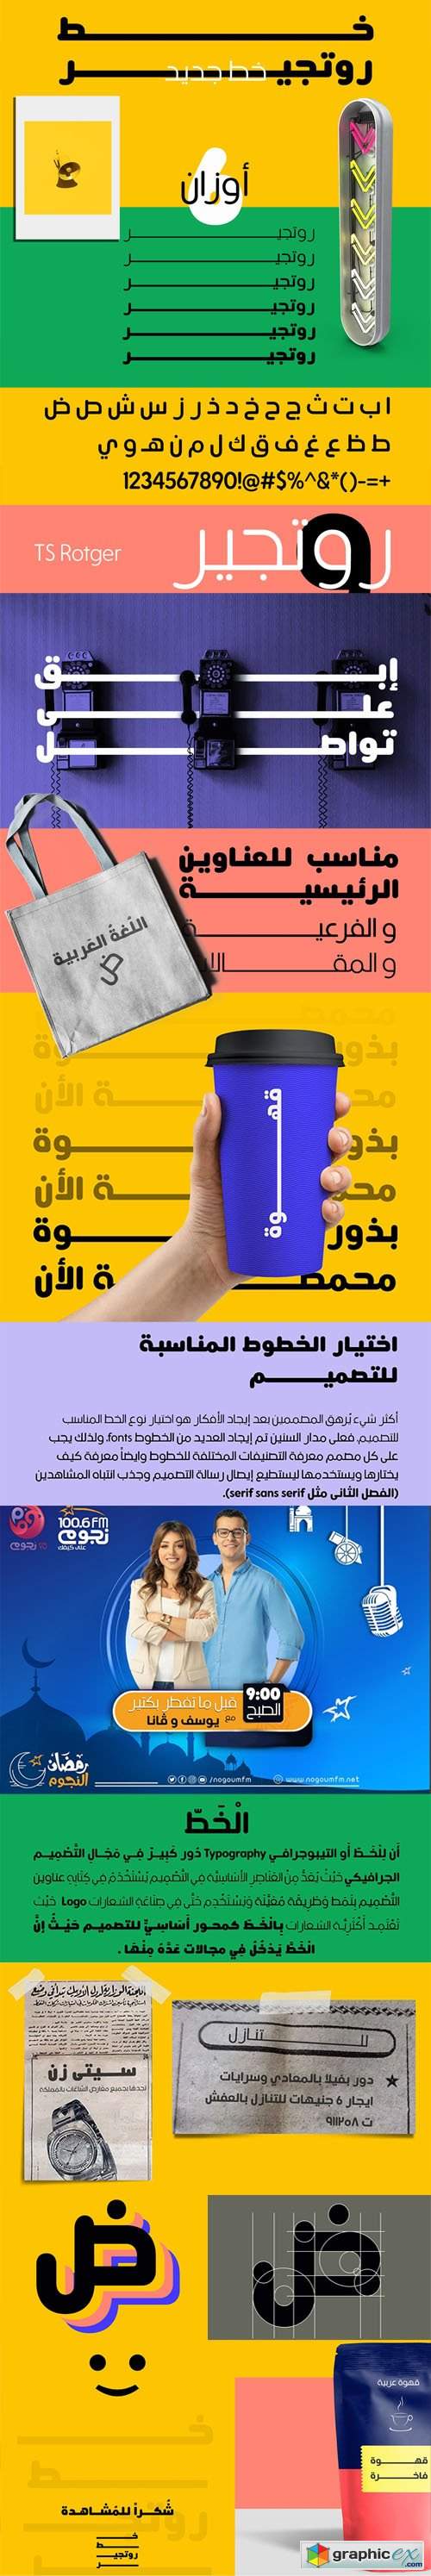  Rotger Arabic Sans Serif Typeface [4-Weights] 